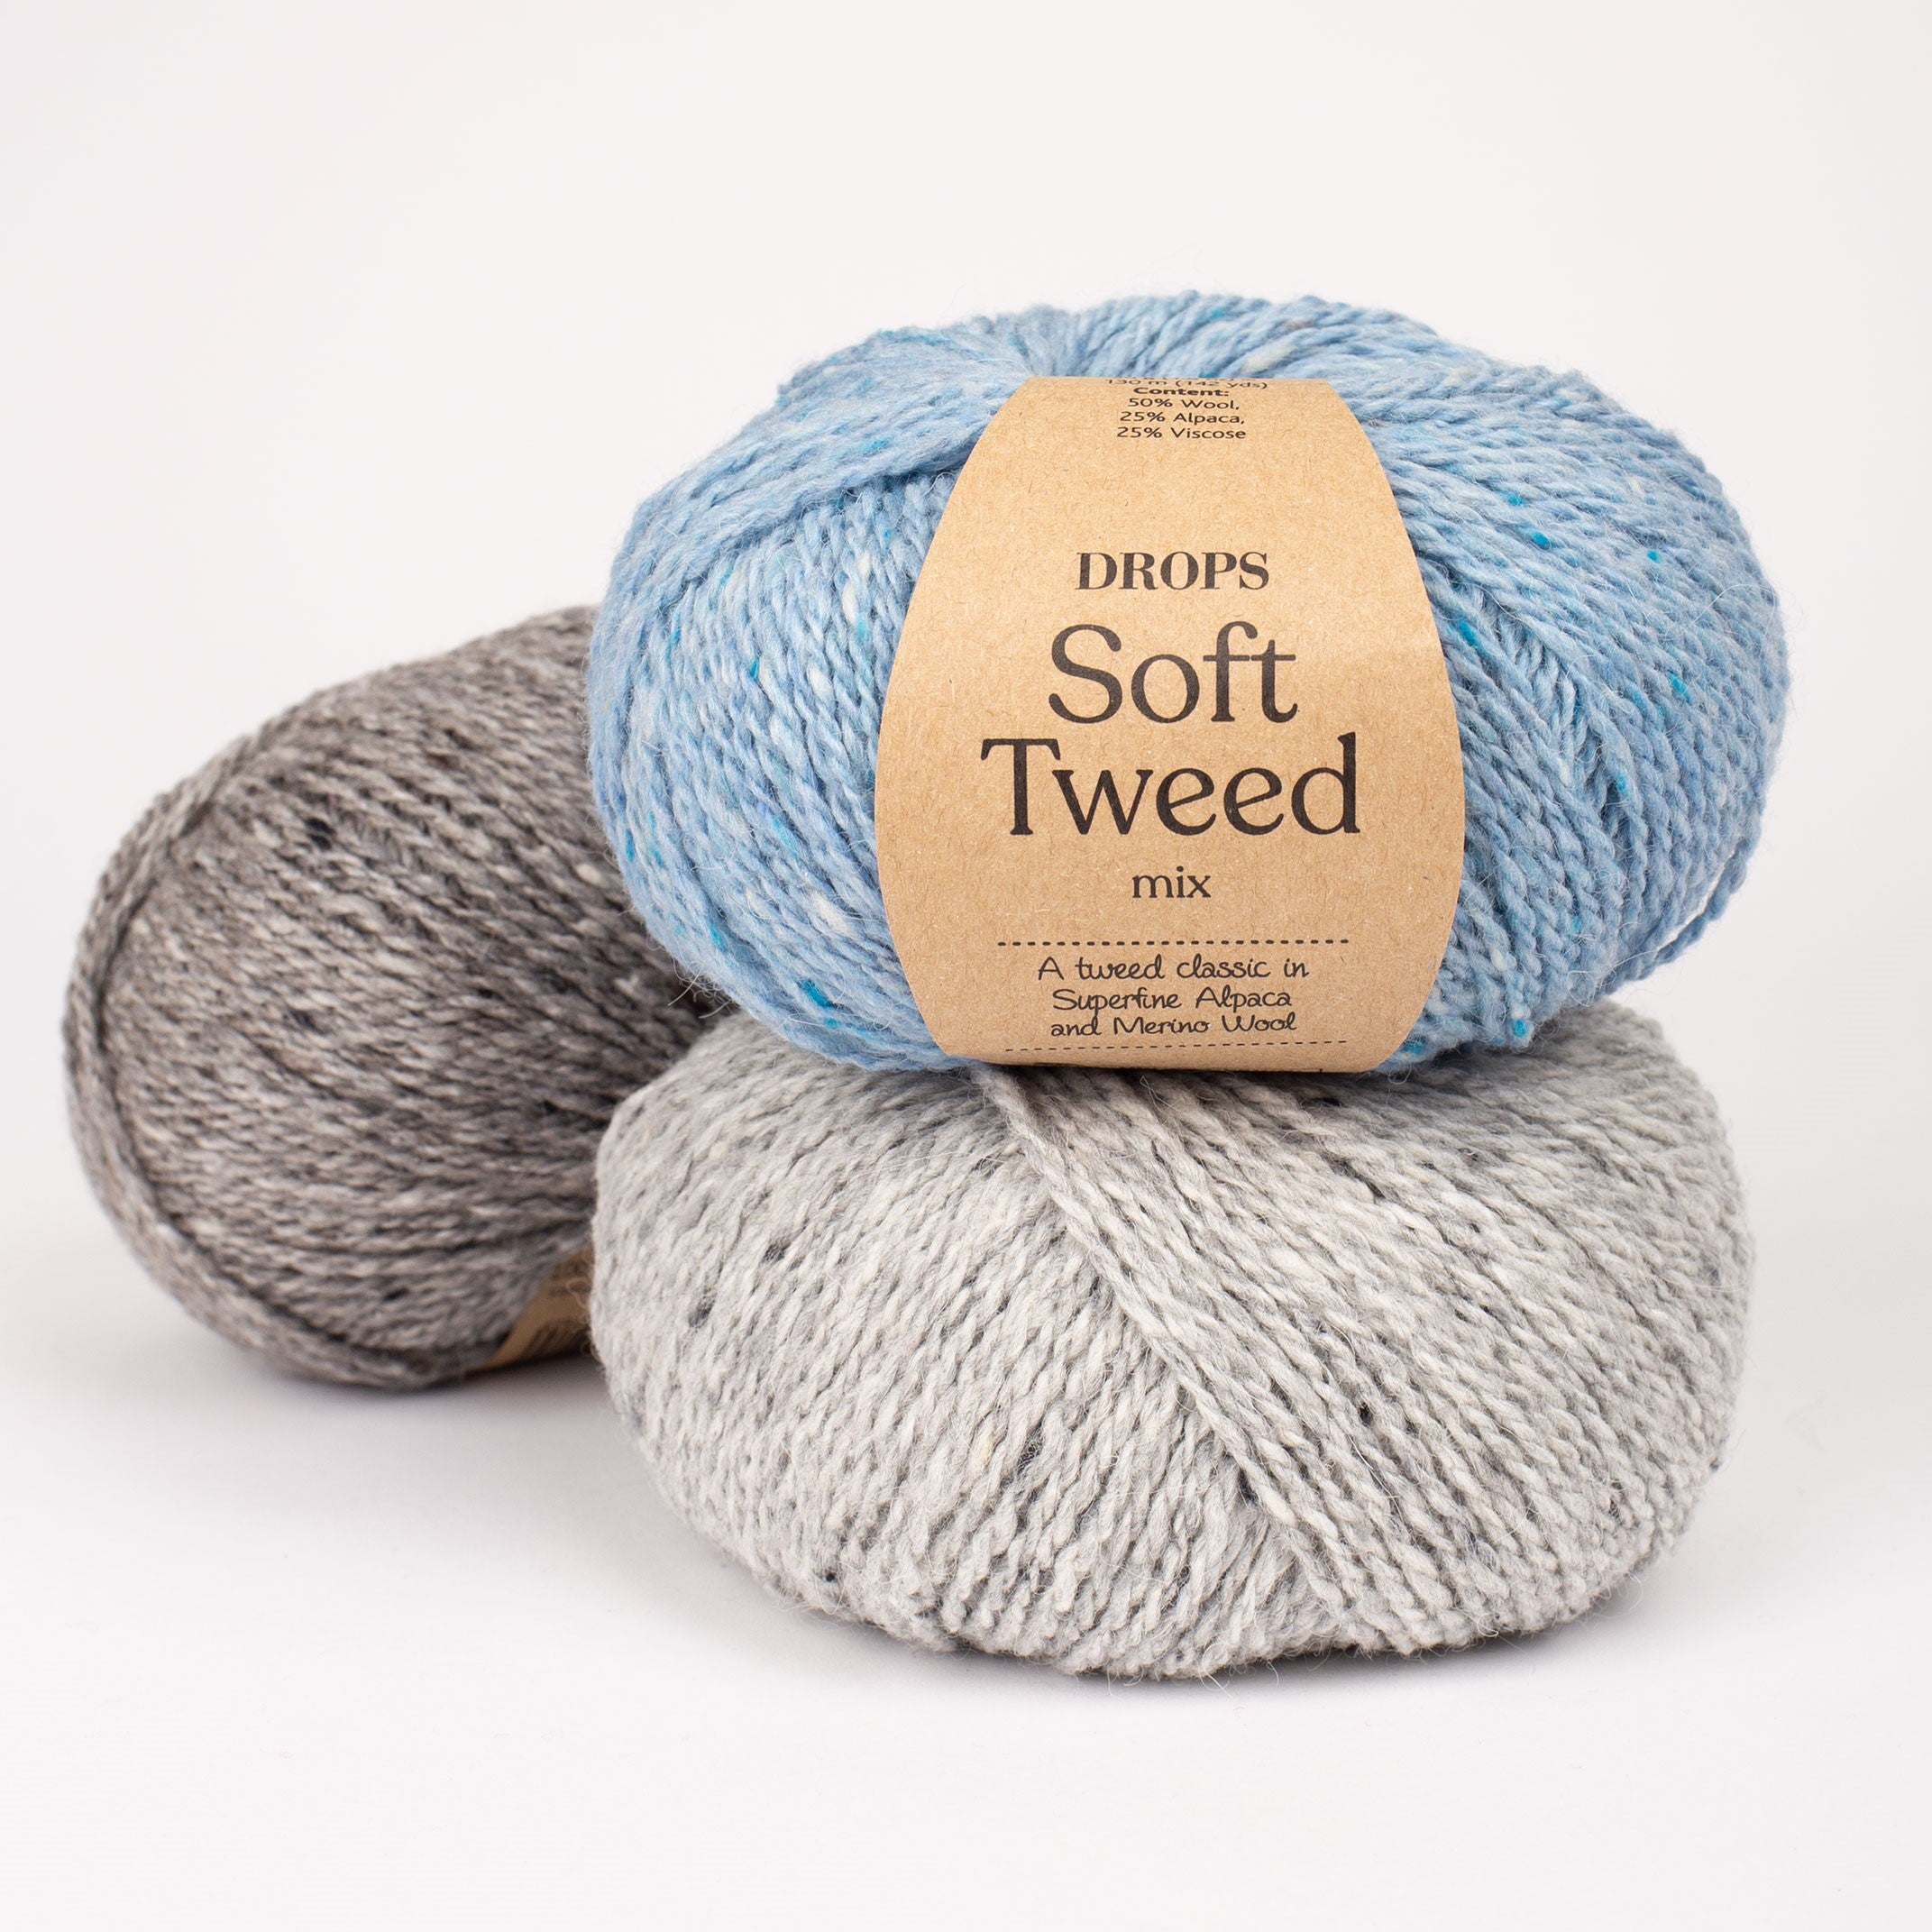 Soft Tweed Drops  Shop Yarn Online Today - Beehive Wool Shop